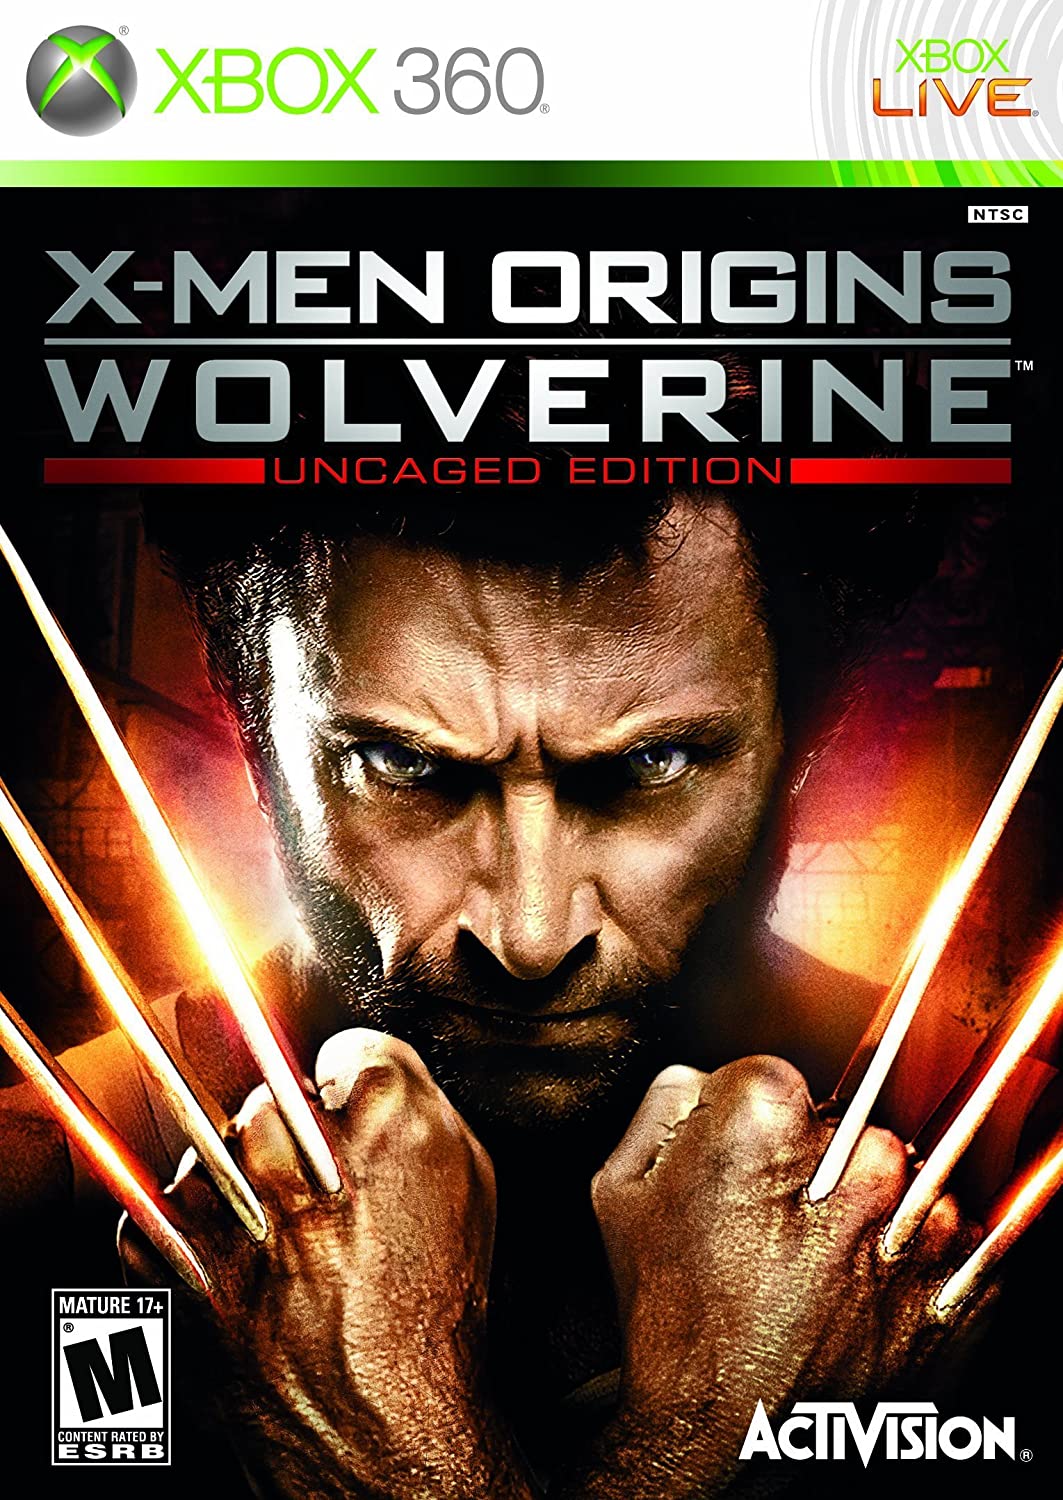 X-Men Origins: Wolverine player count stats